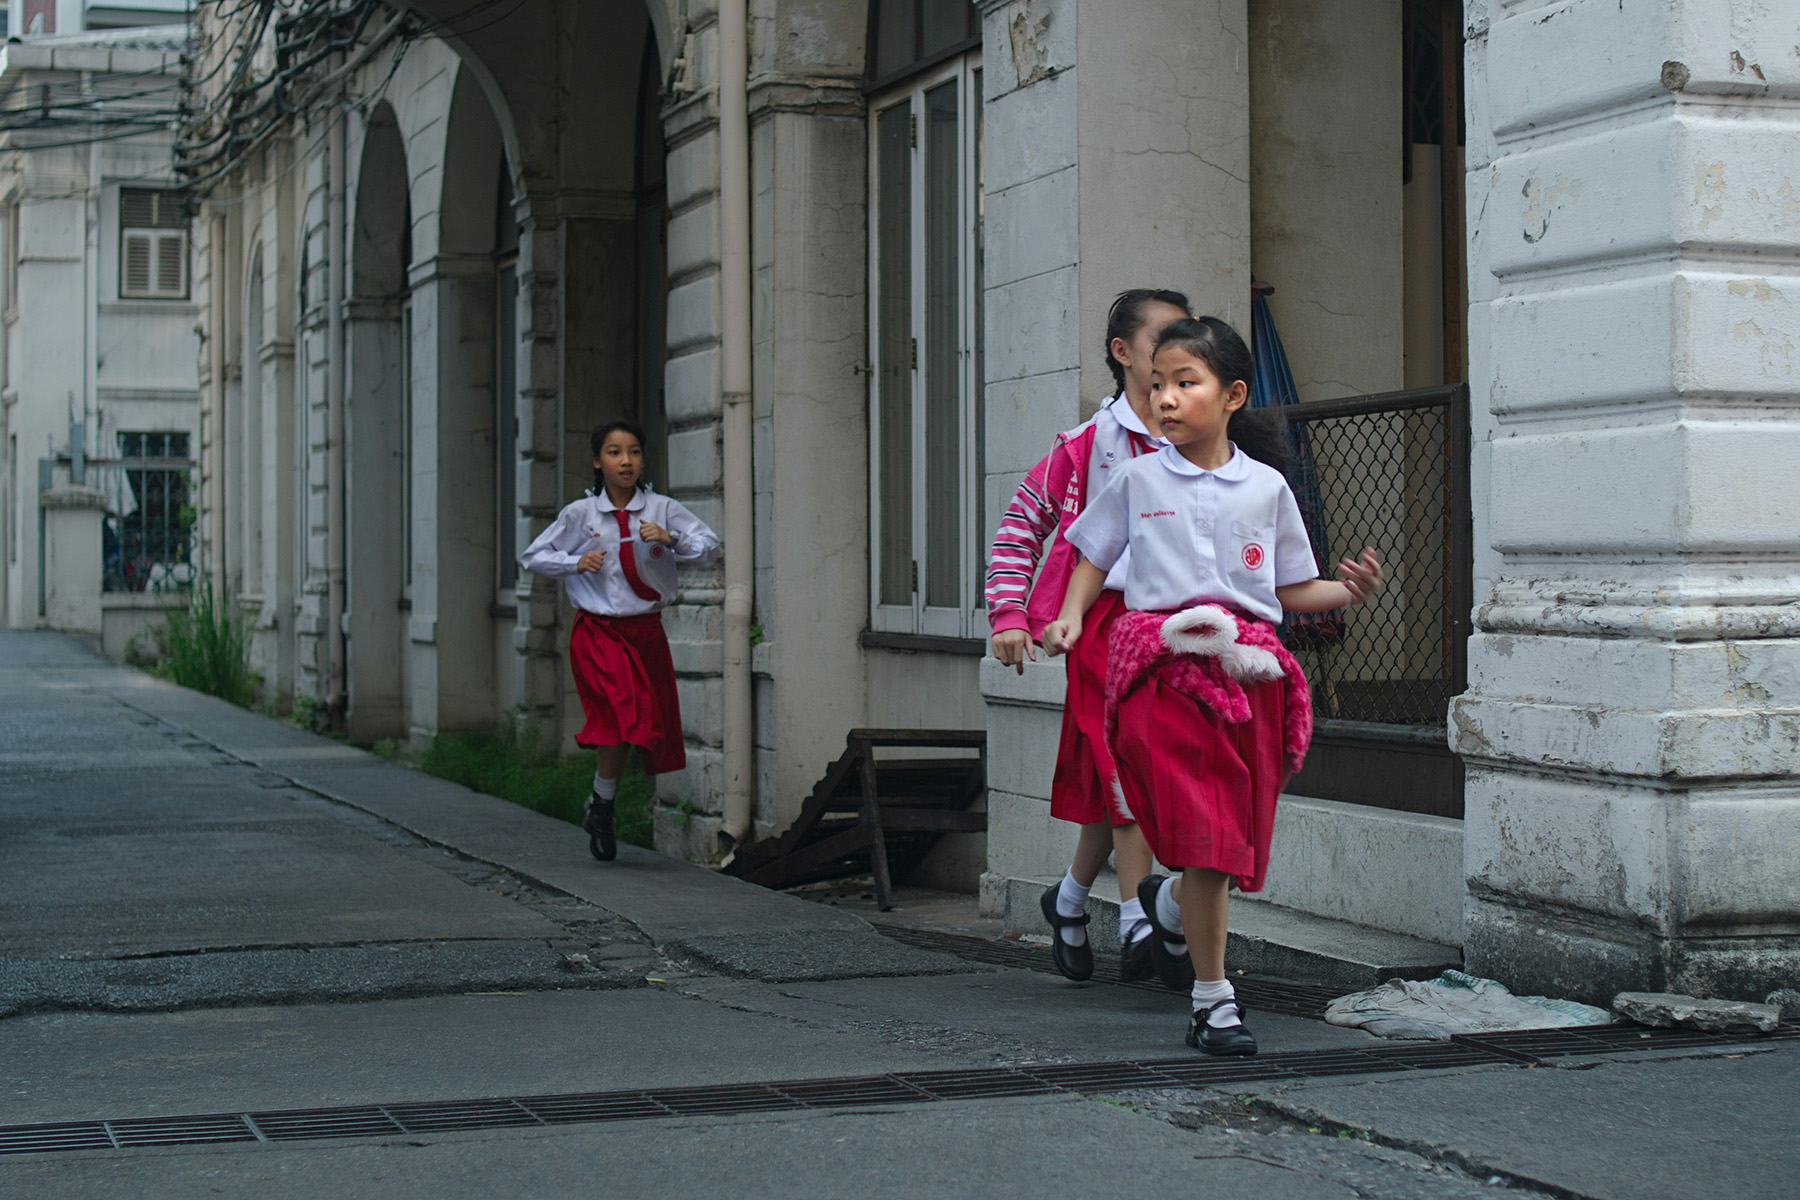 Three girls in school uniforms running on the way to school.

